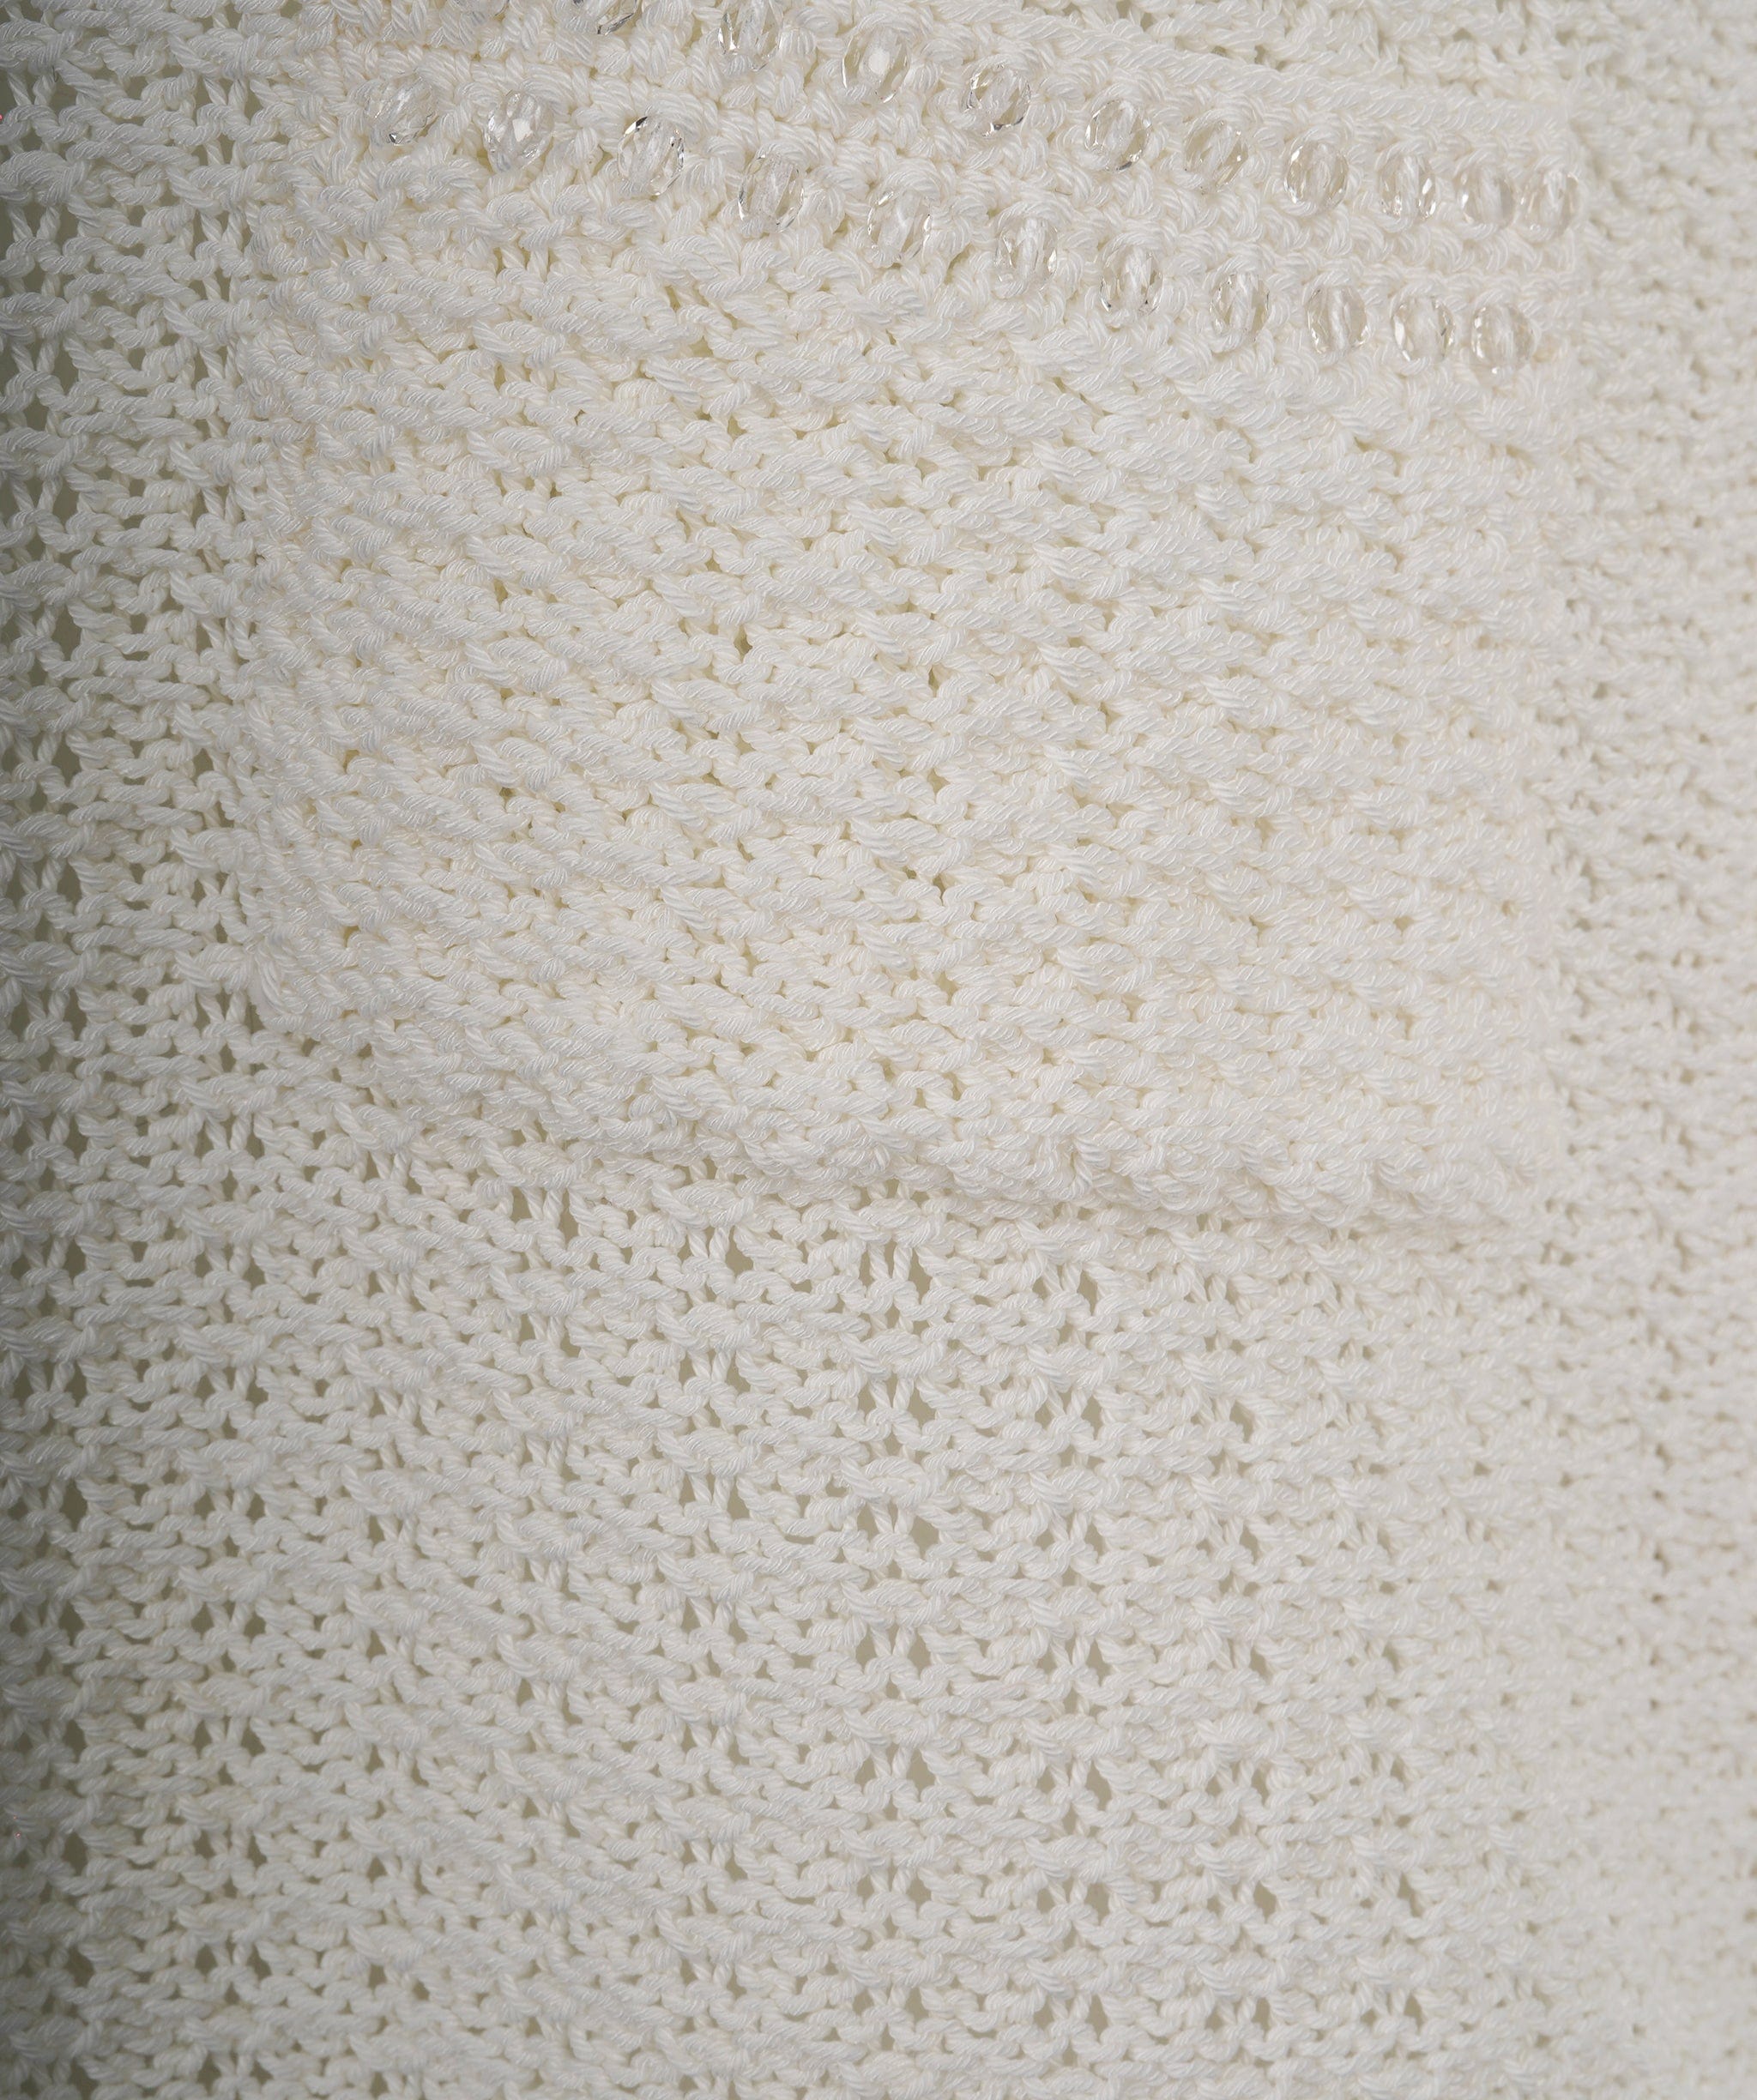 Chanel Chanel Knit Cream Detail CC Top 36/38 ALC1489